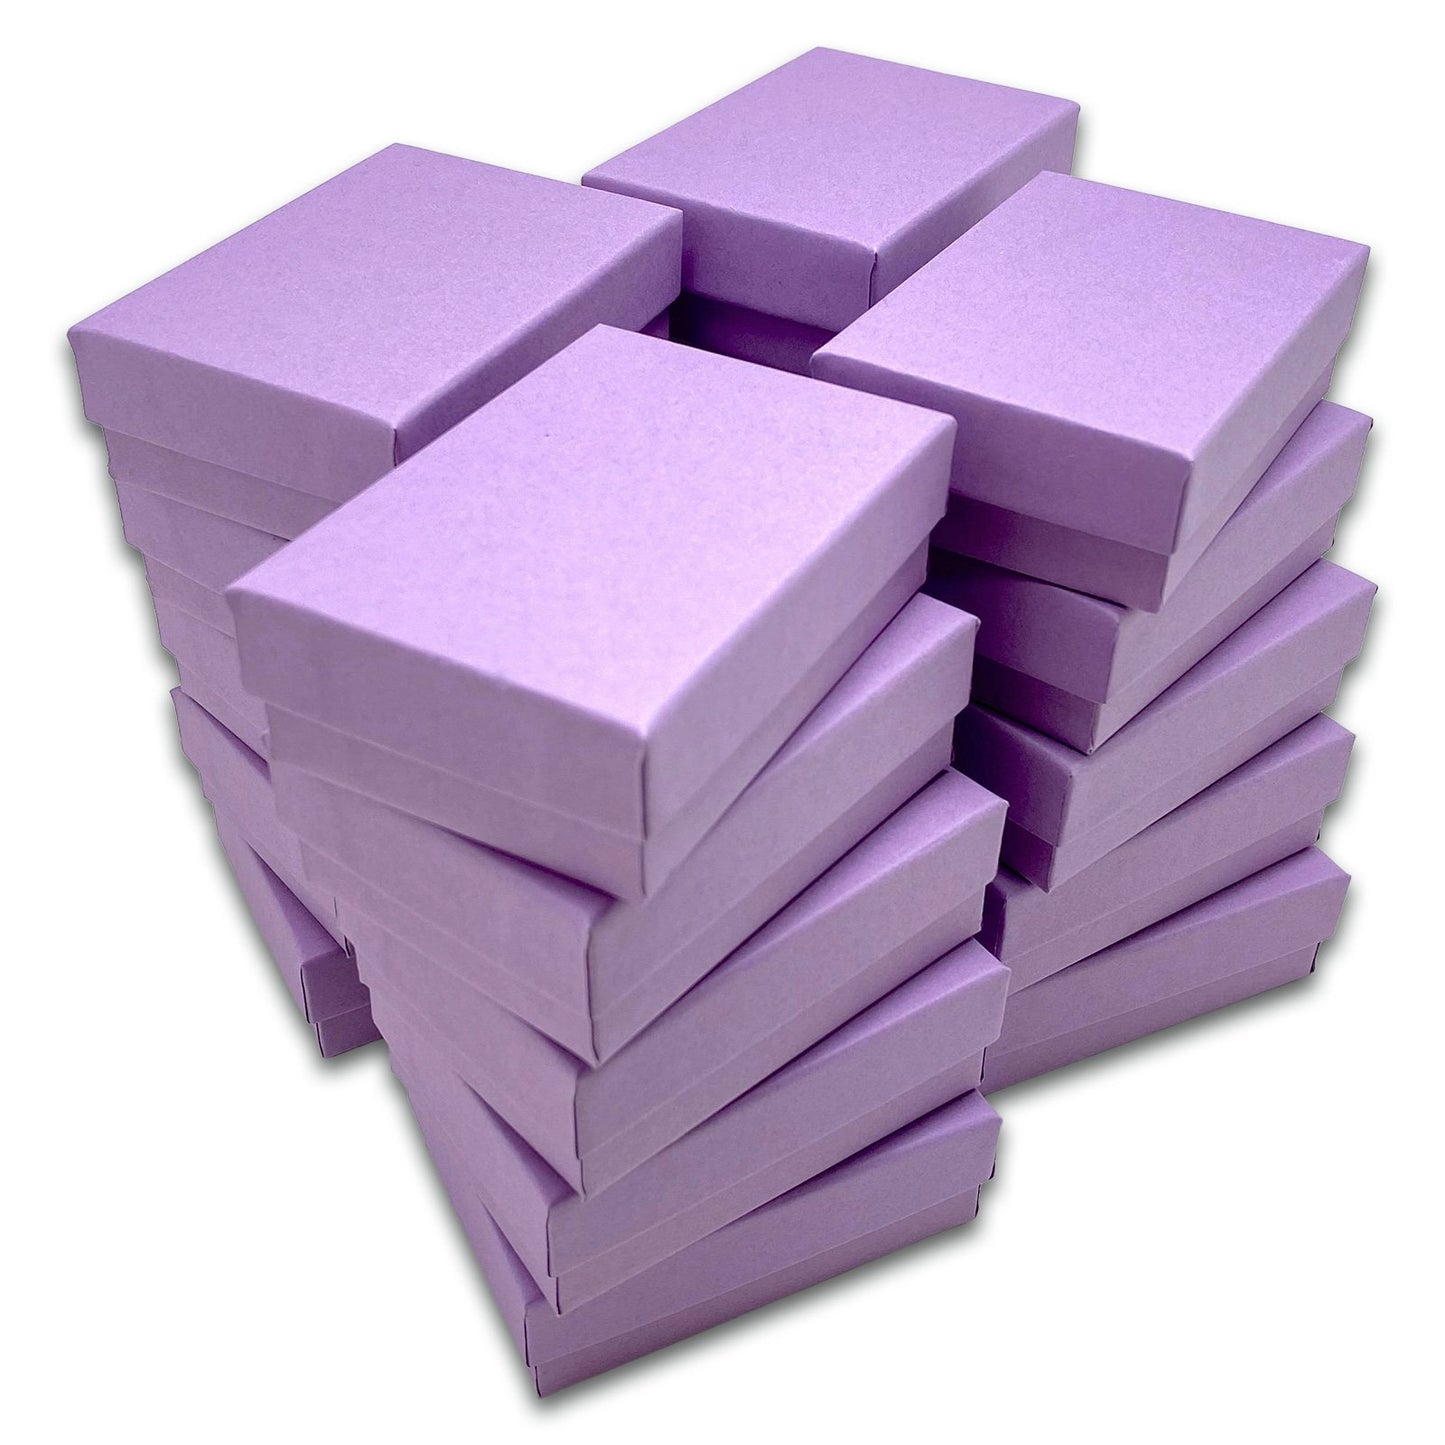 3 1/4" x 2 1/4" x 1" Matte Purple Cotton Filled Paper Box